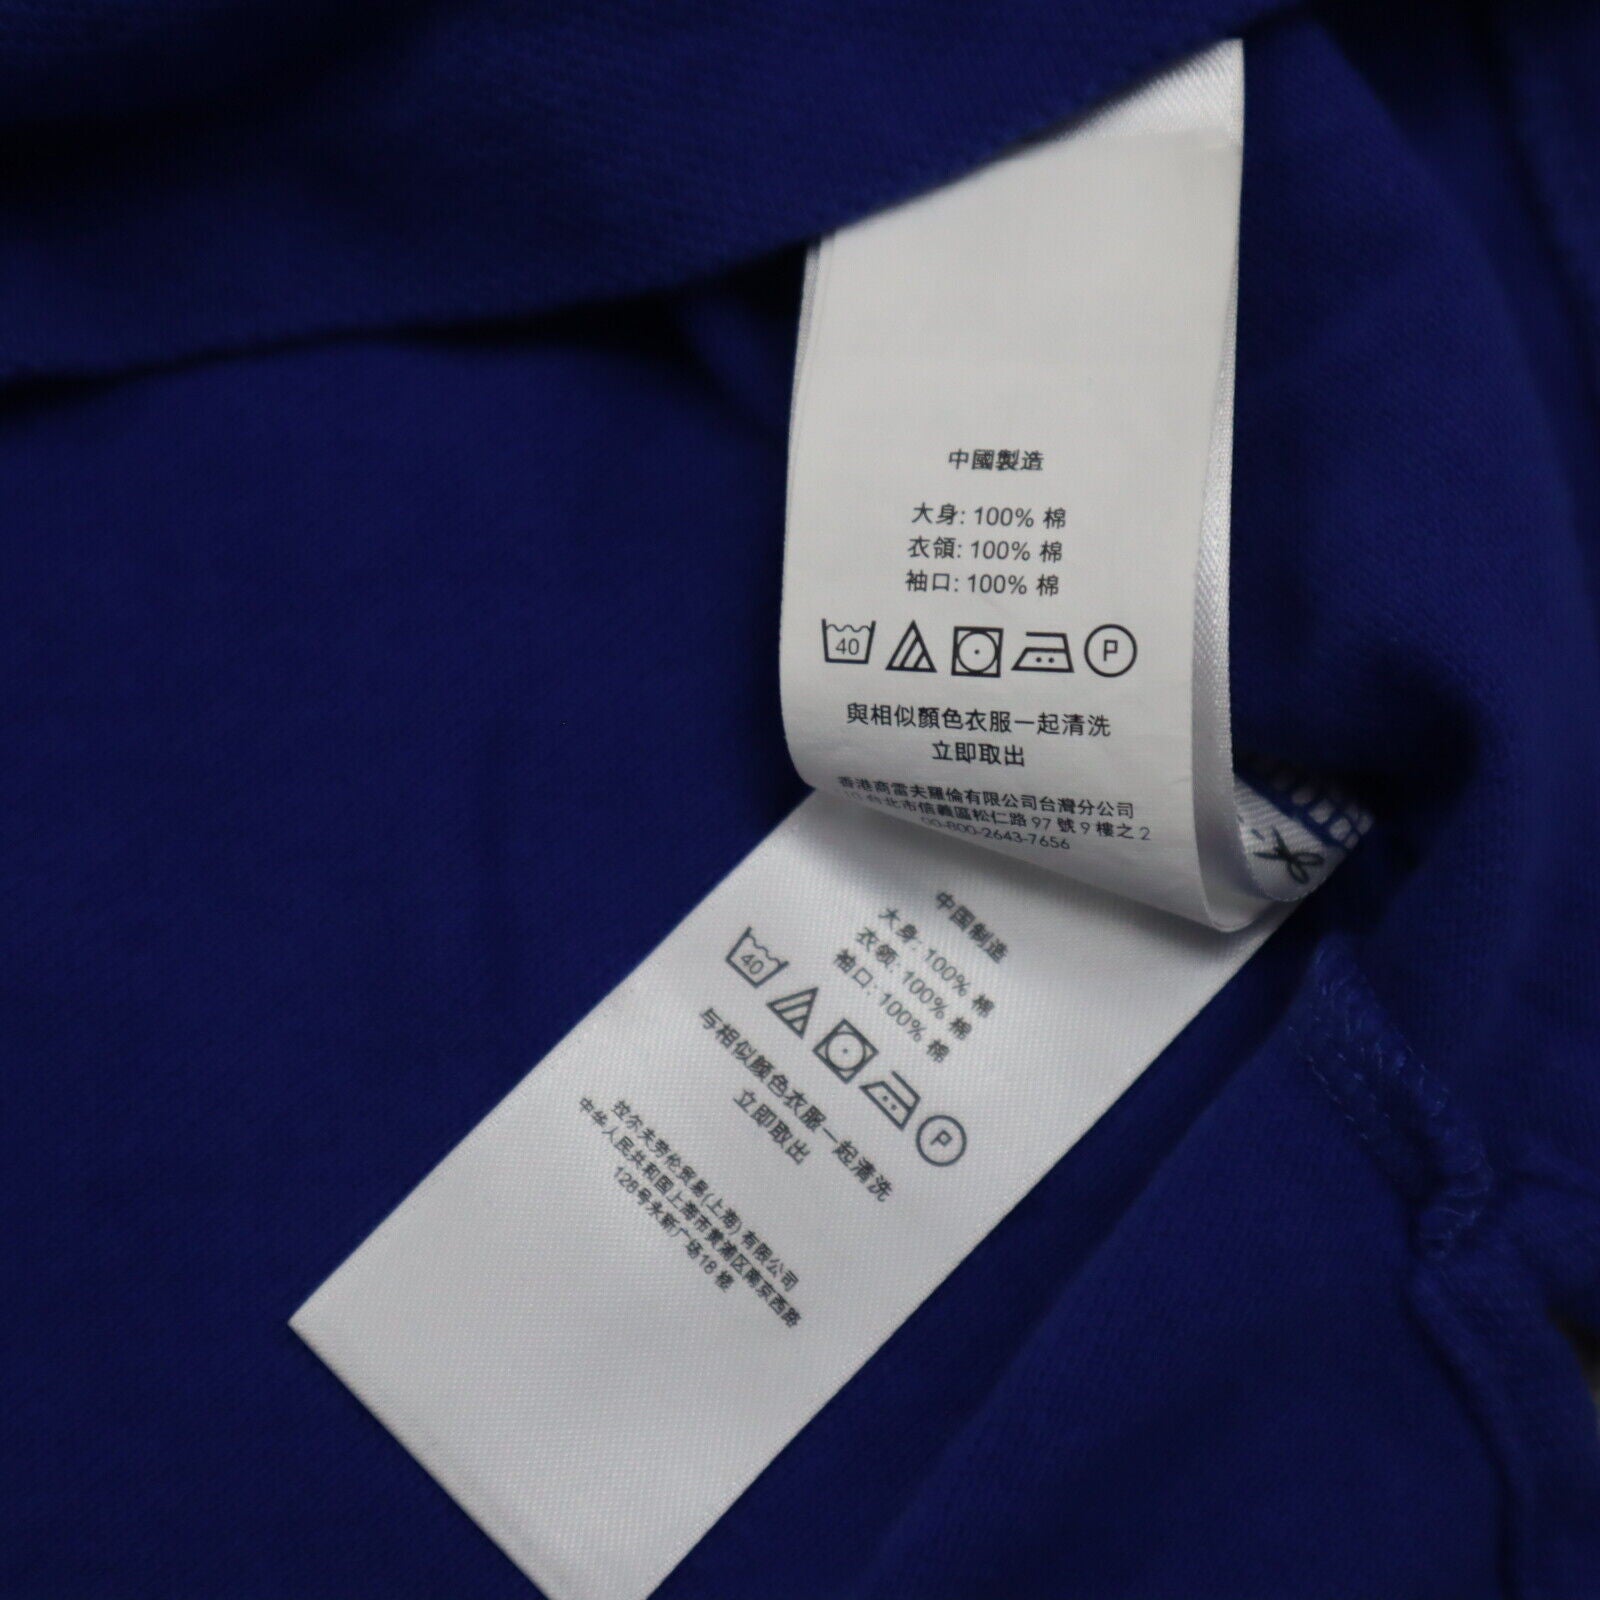 Polo Ralph Lauren Kid Boy Polo Shirt Blue Size 18 Cotton